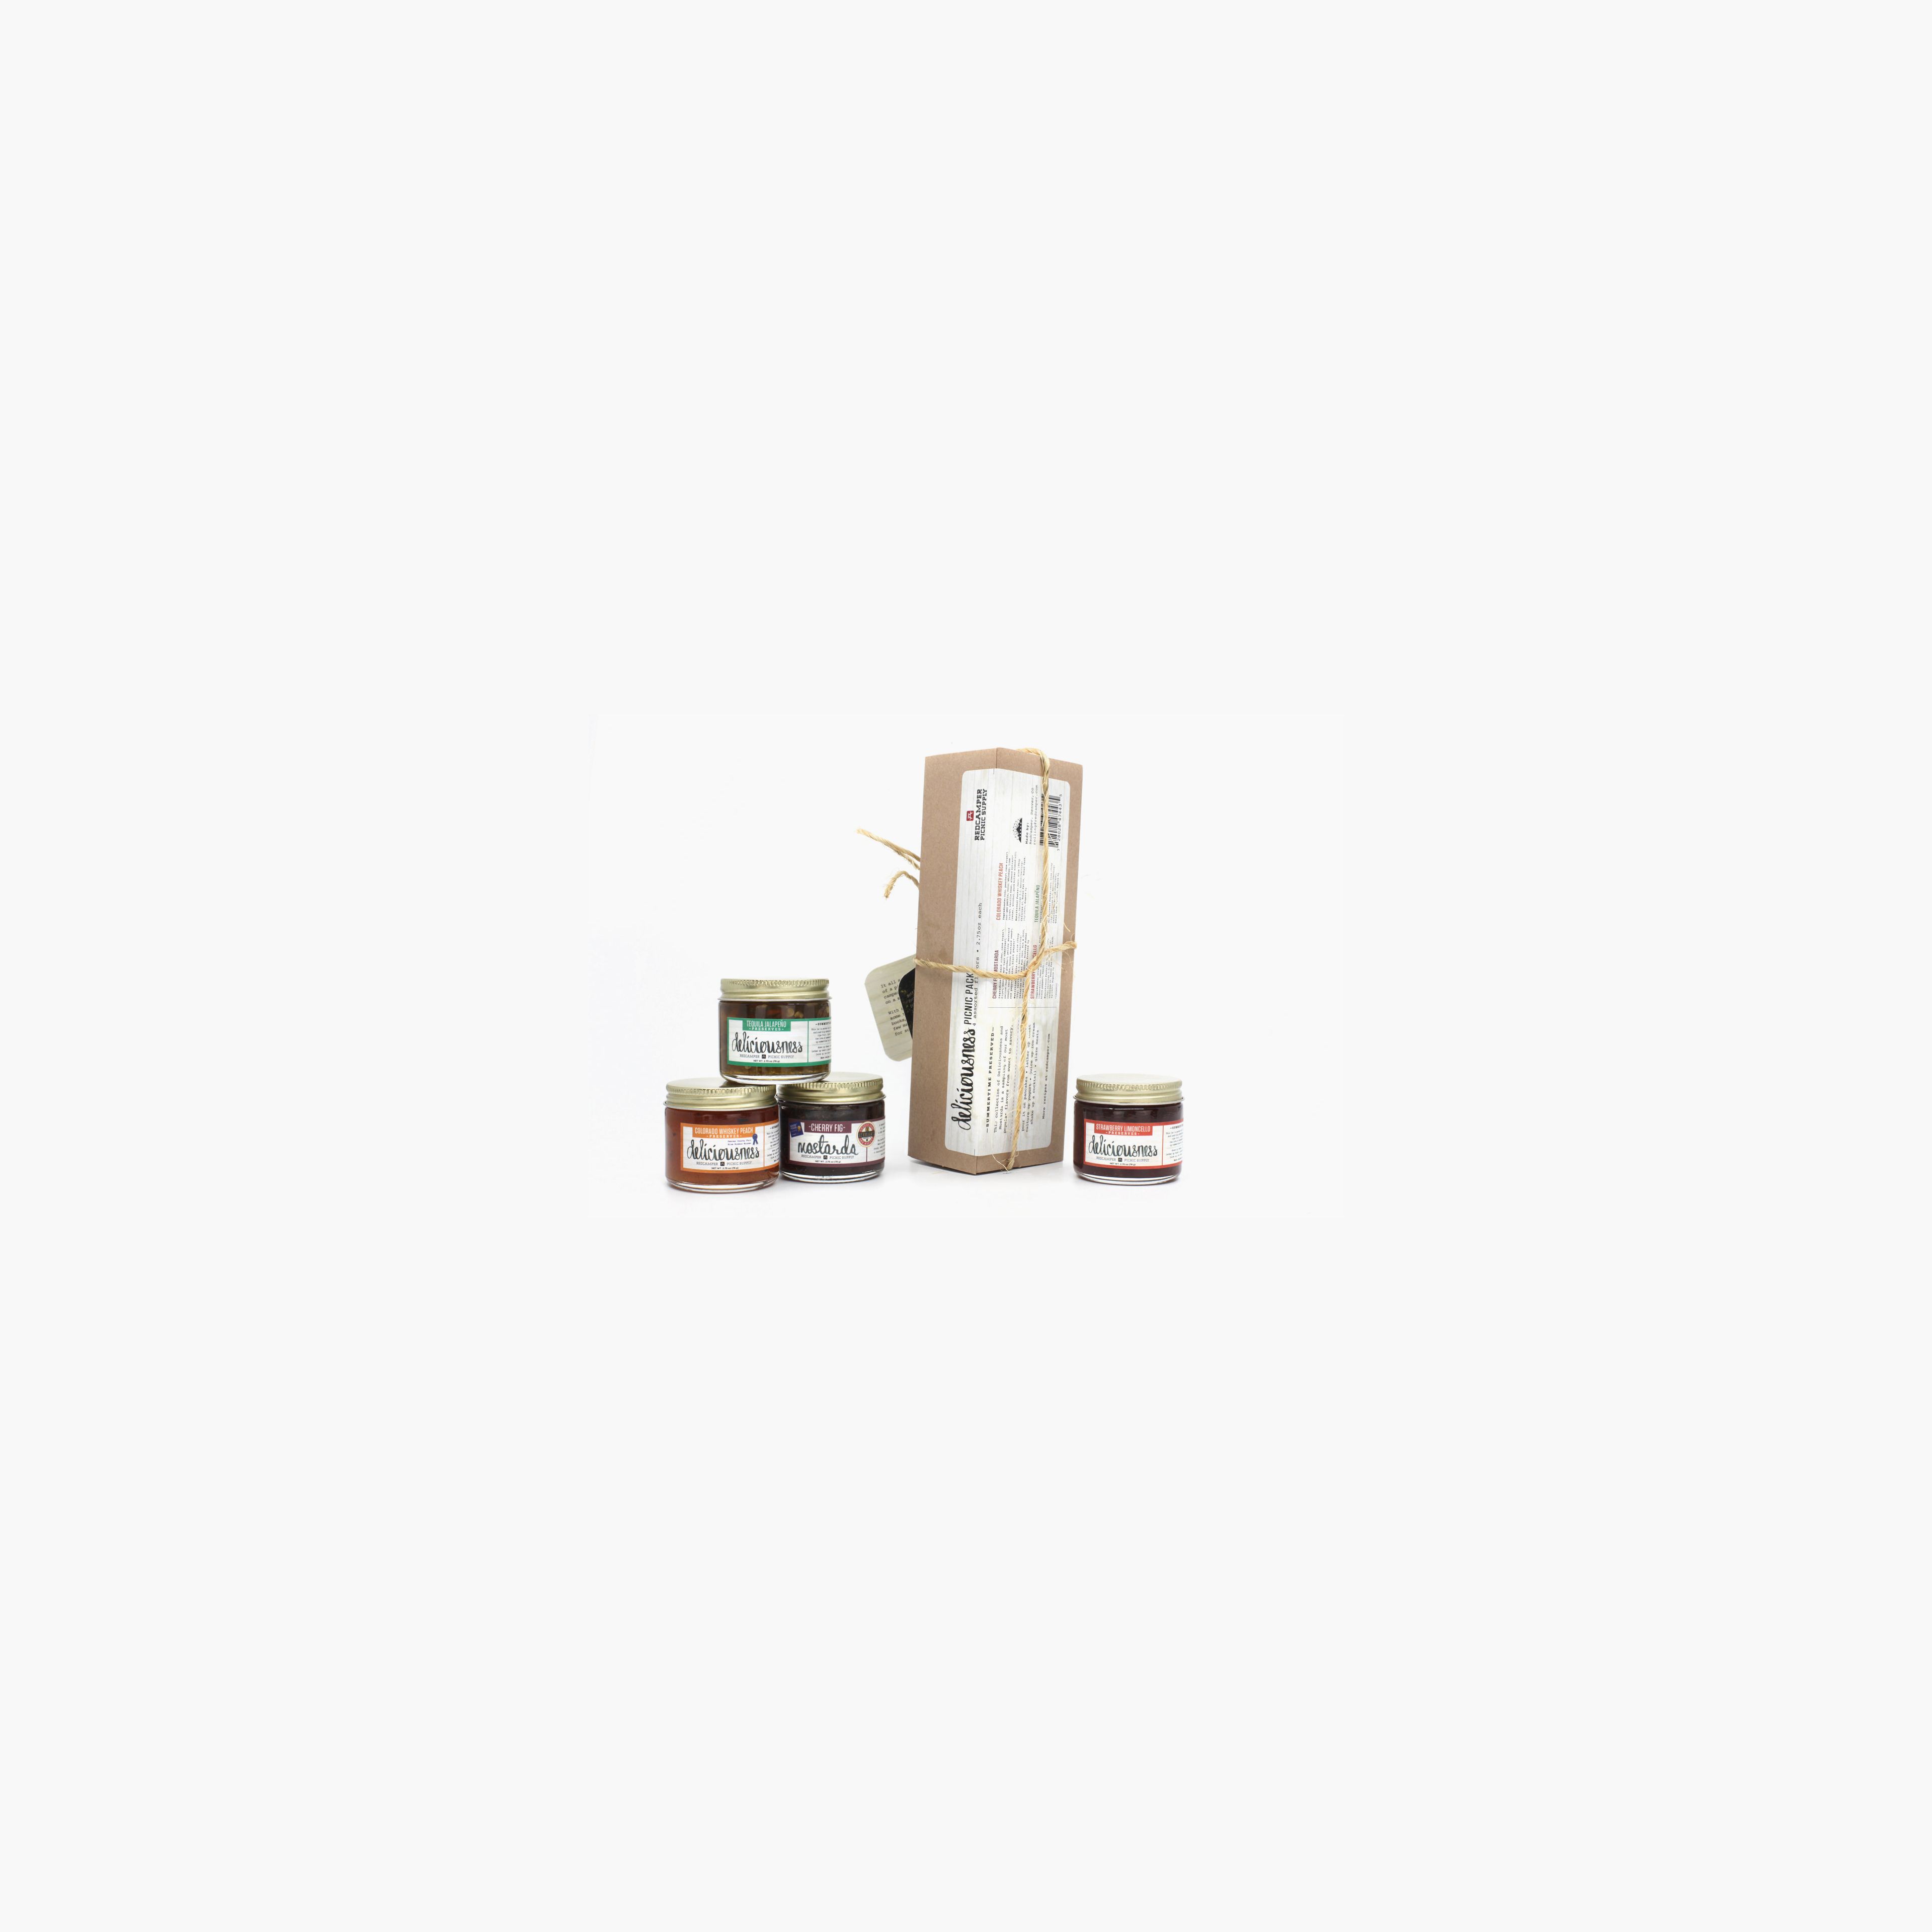 Gift Set Picnic 4 Pack - 4 small jars